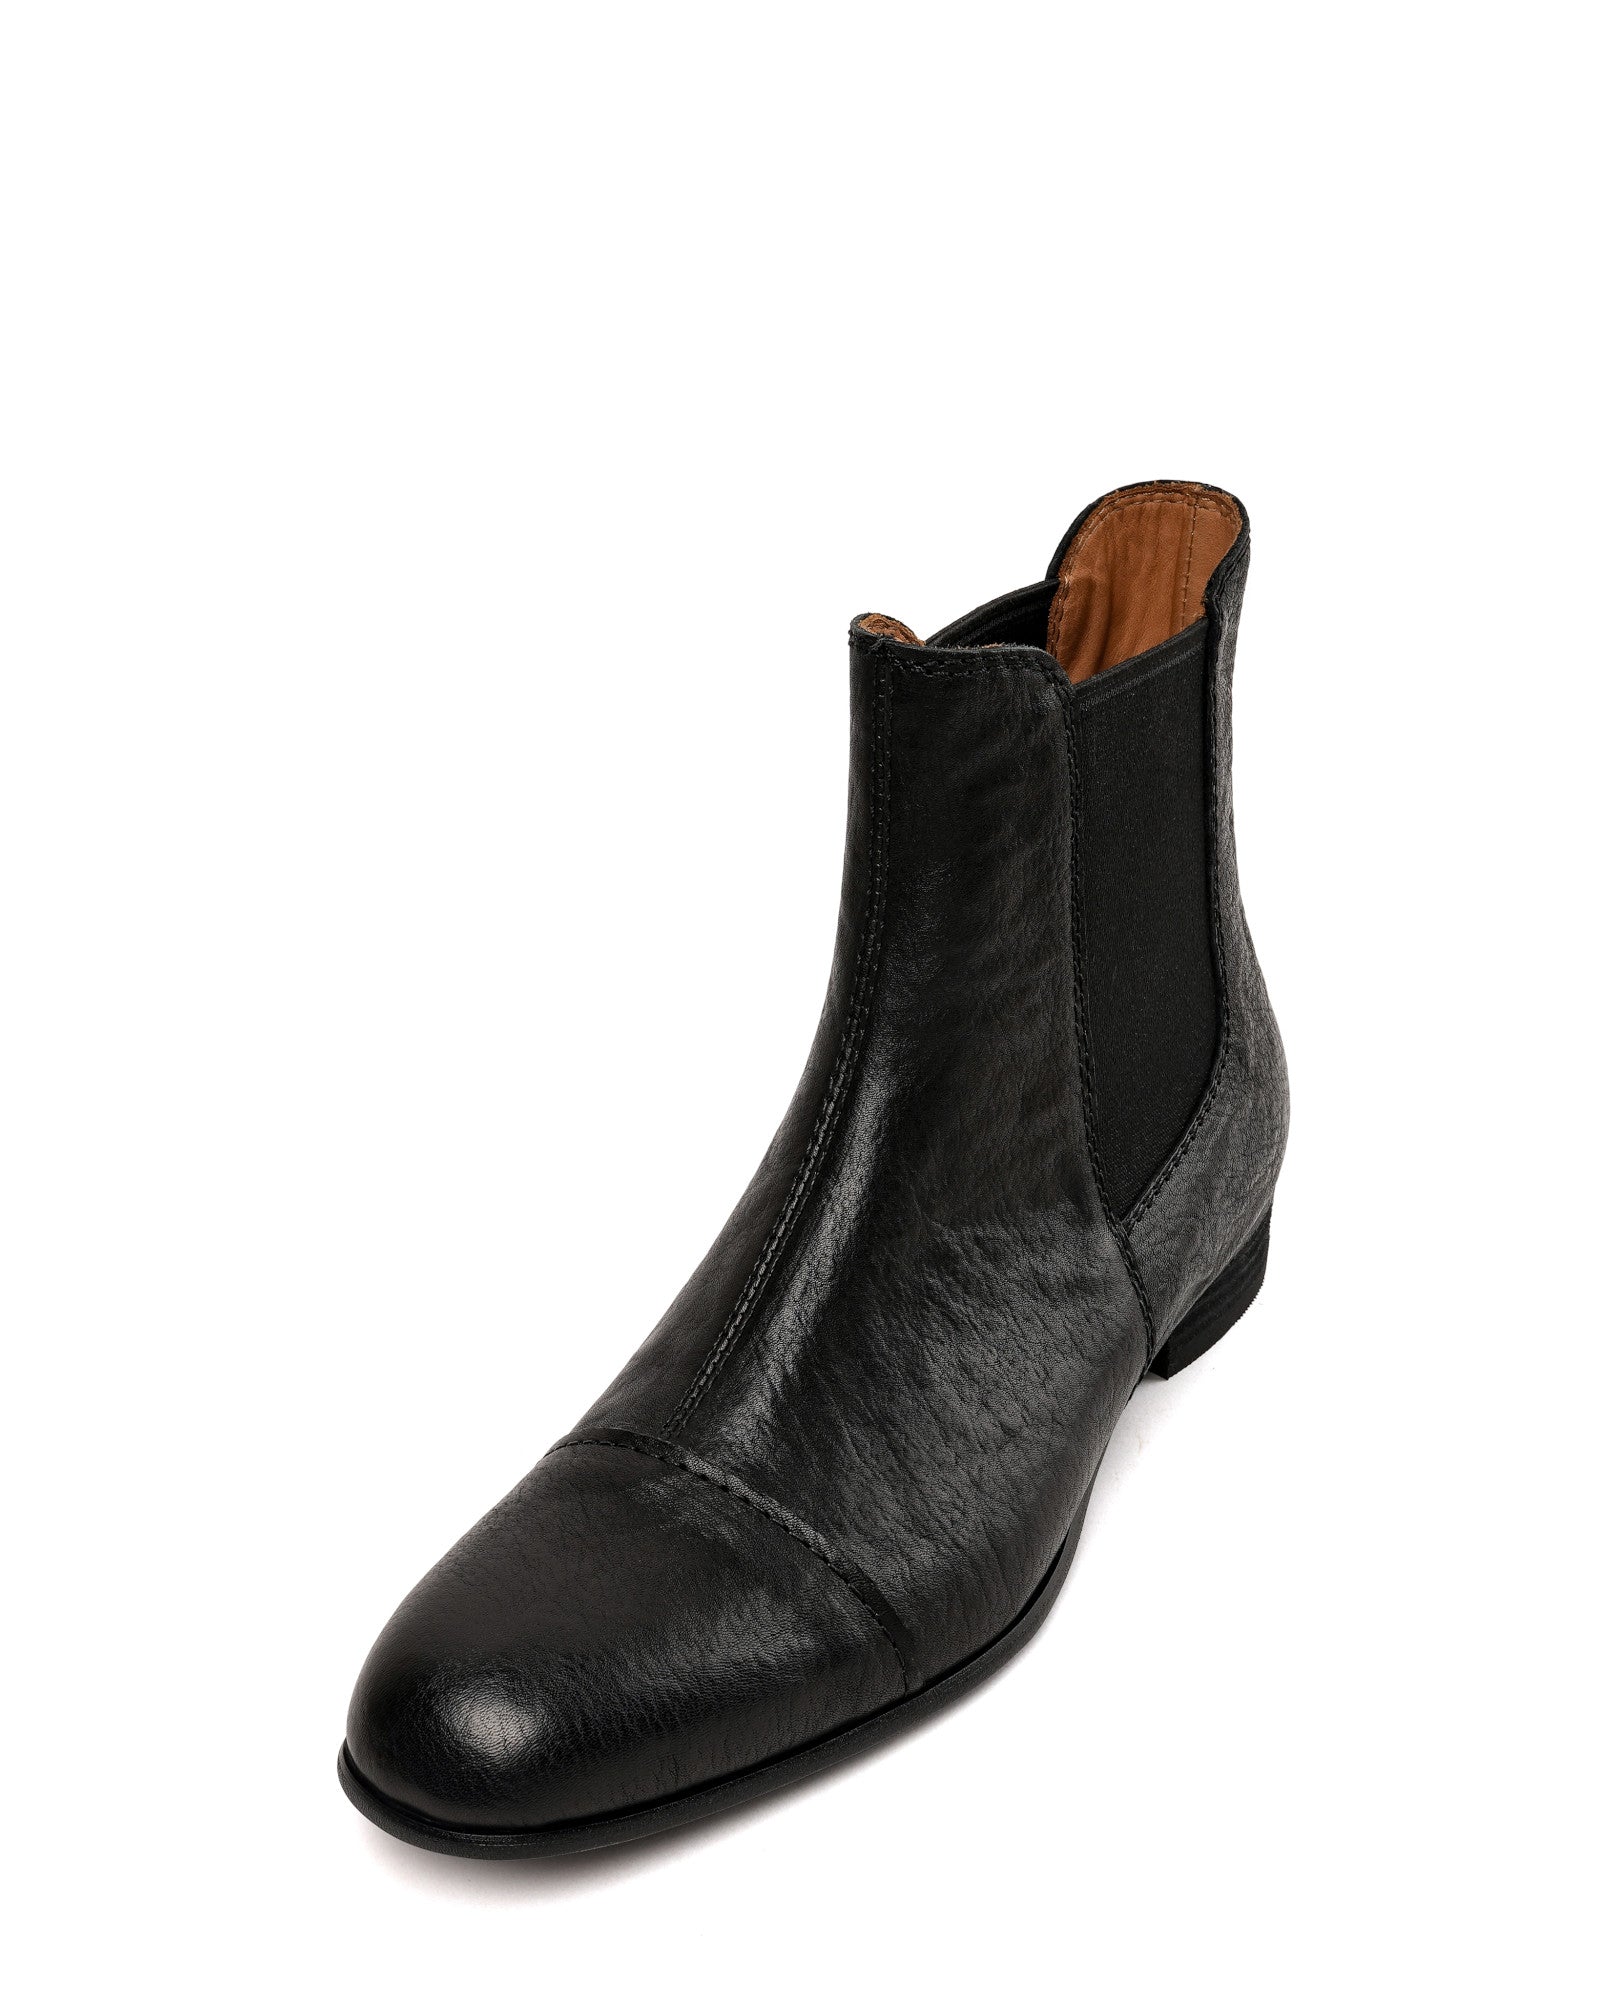 370-cap-toe-black-leather-boots